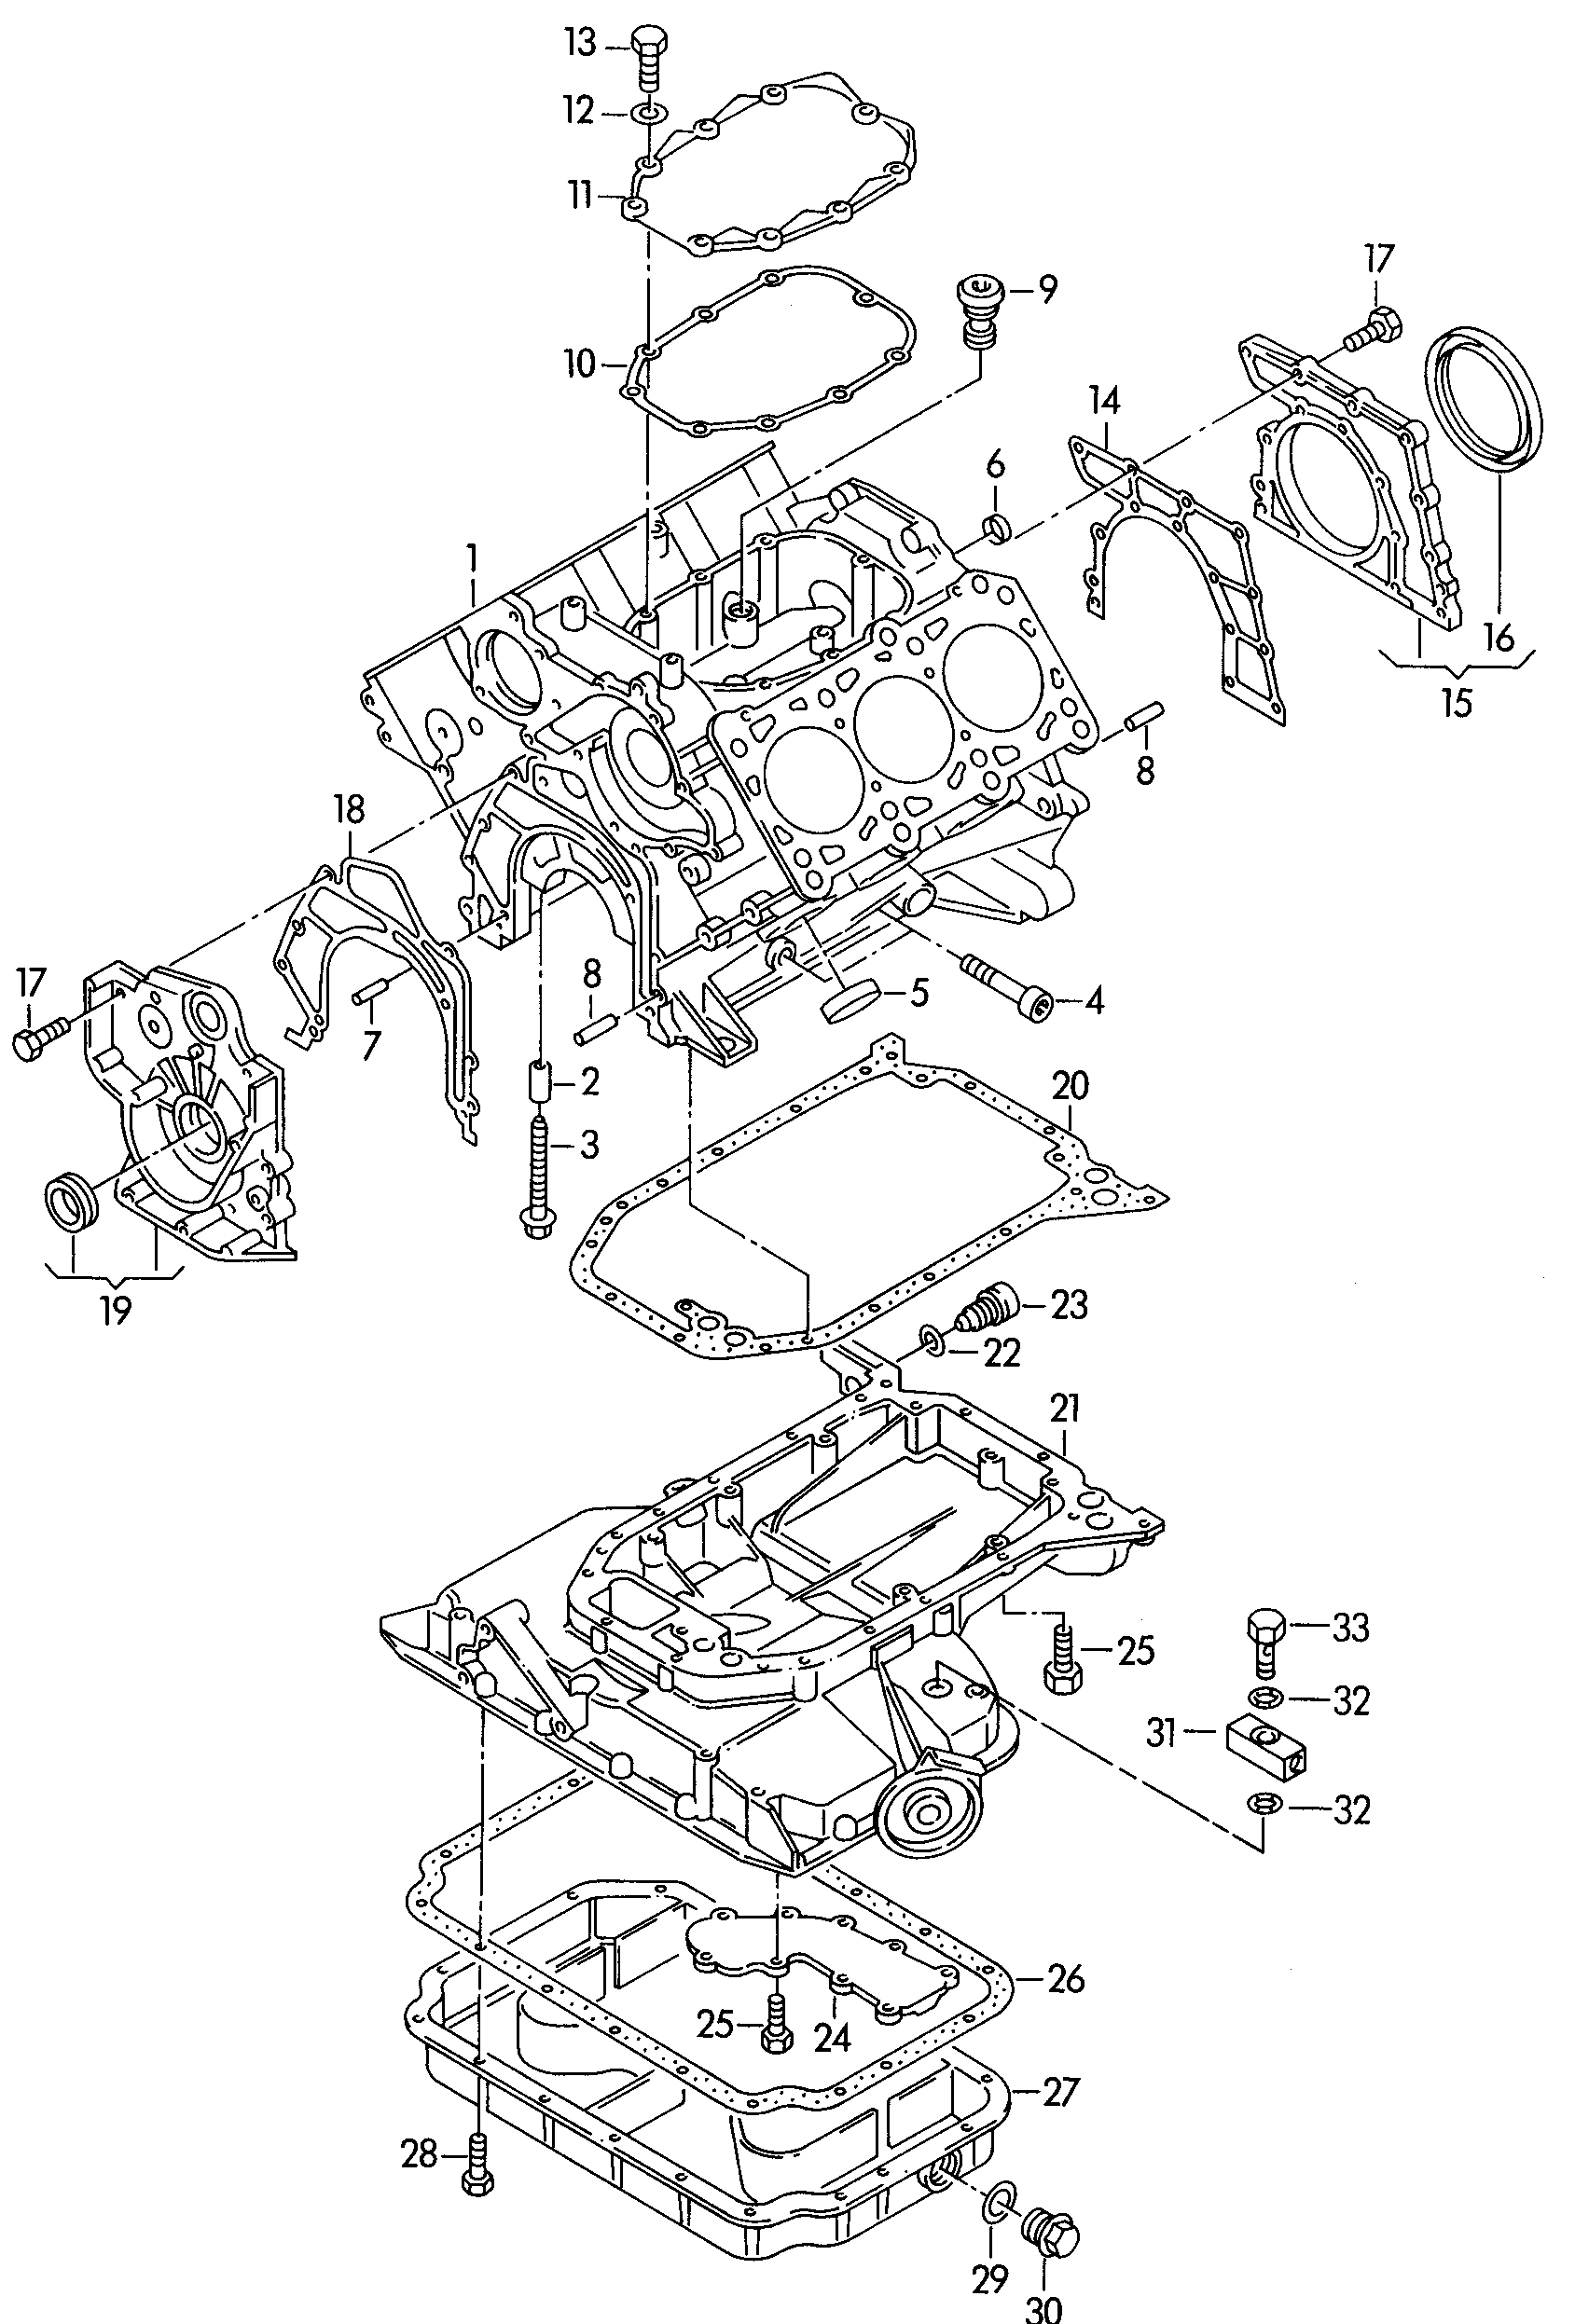 Zylinderblock mit KolbenÖlwanne 2,6/2,8Ltr. - Audi Coupe quattro - acoq